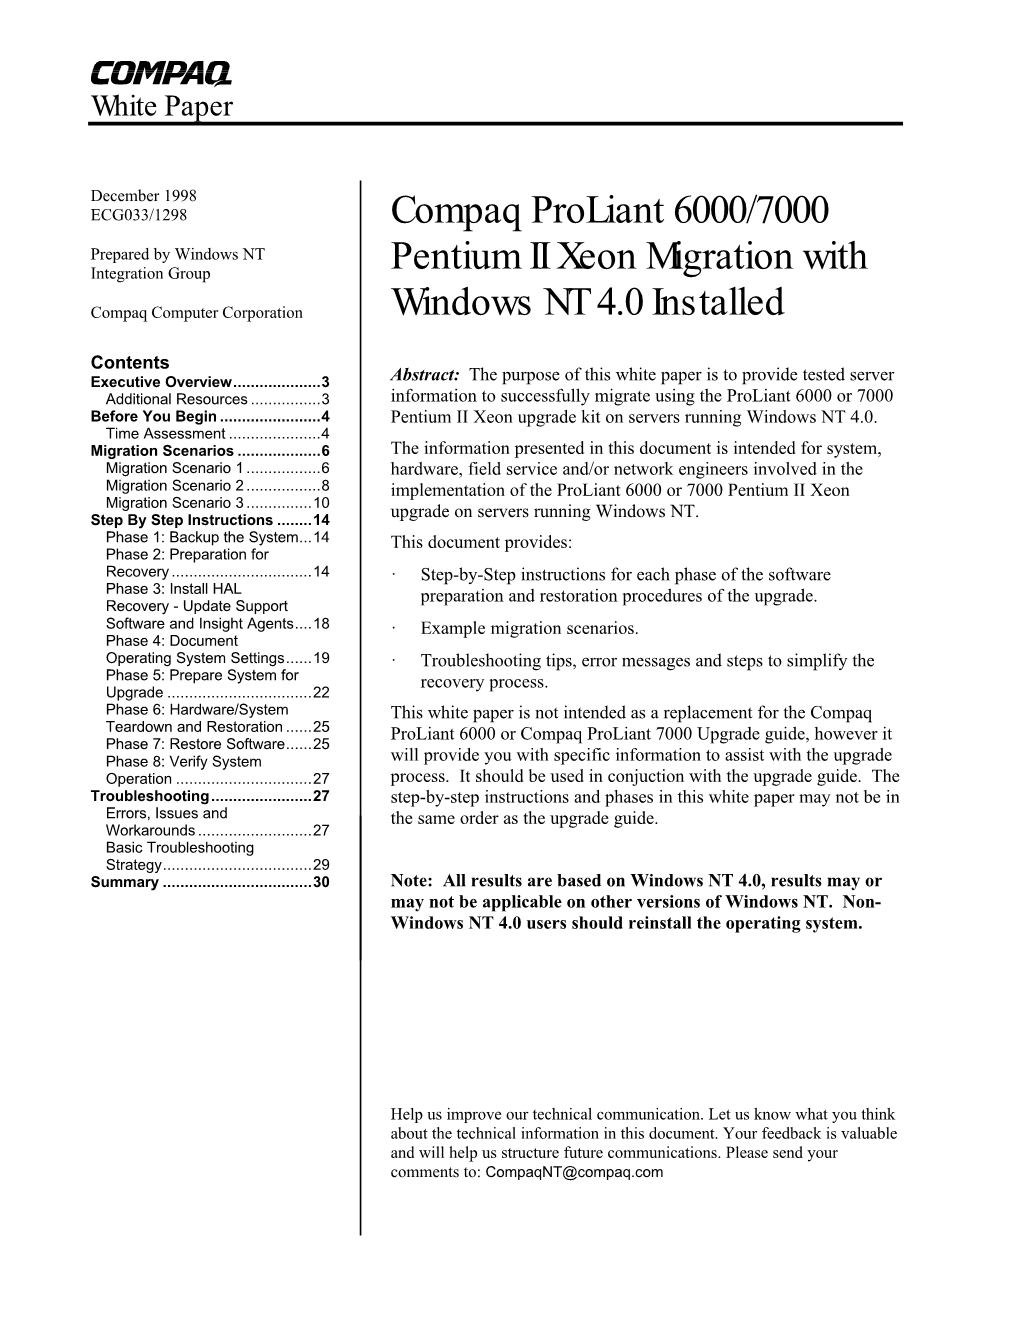 Compaq Proliant 6000/7000 Pentium II Xeon Migration with Windows NT